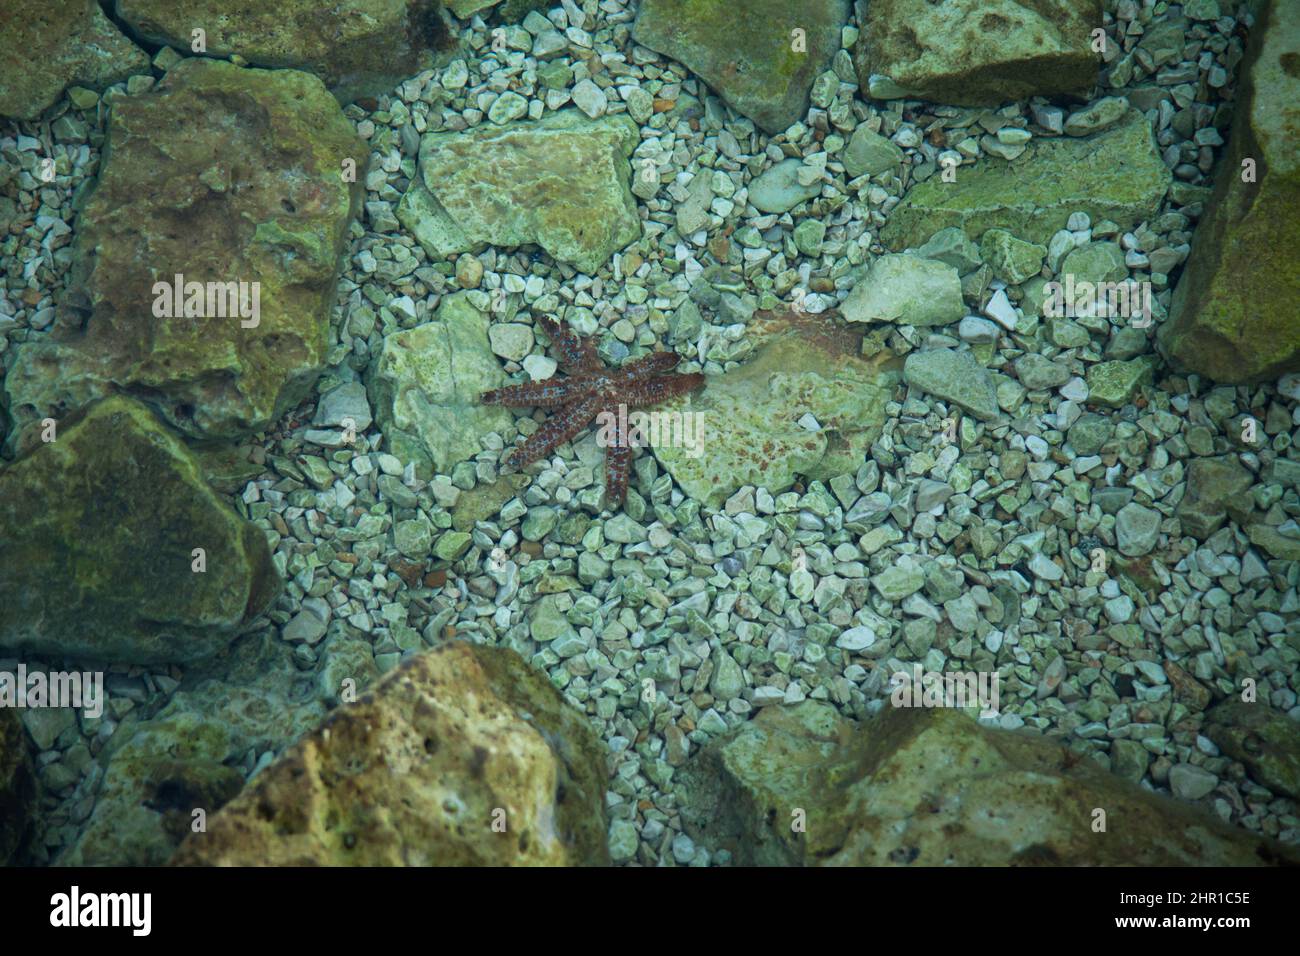 Ein roter Seesterne bewegt sich am Meeresboden entlang Stockfoto